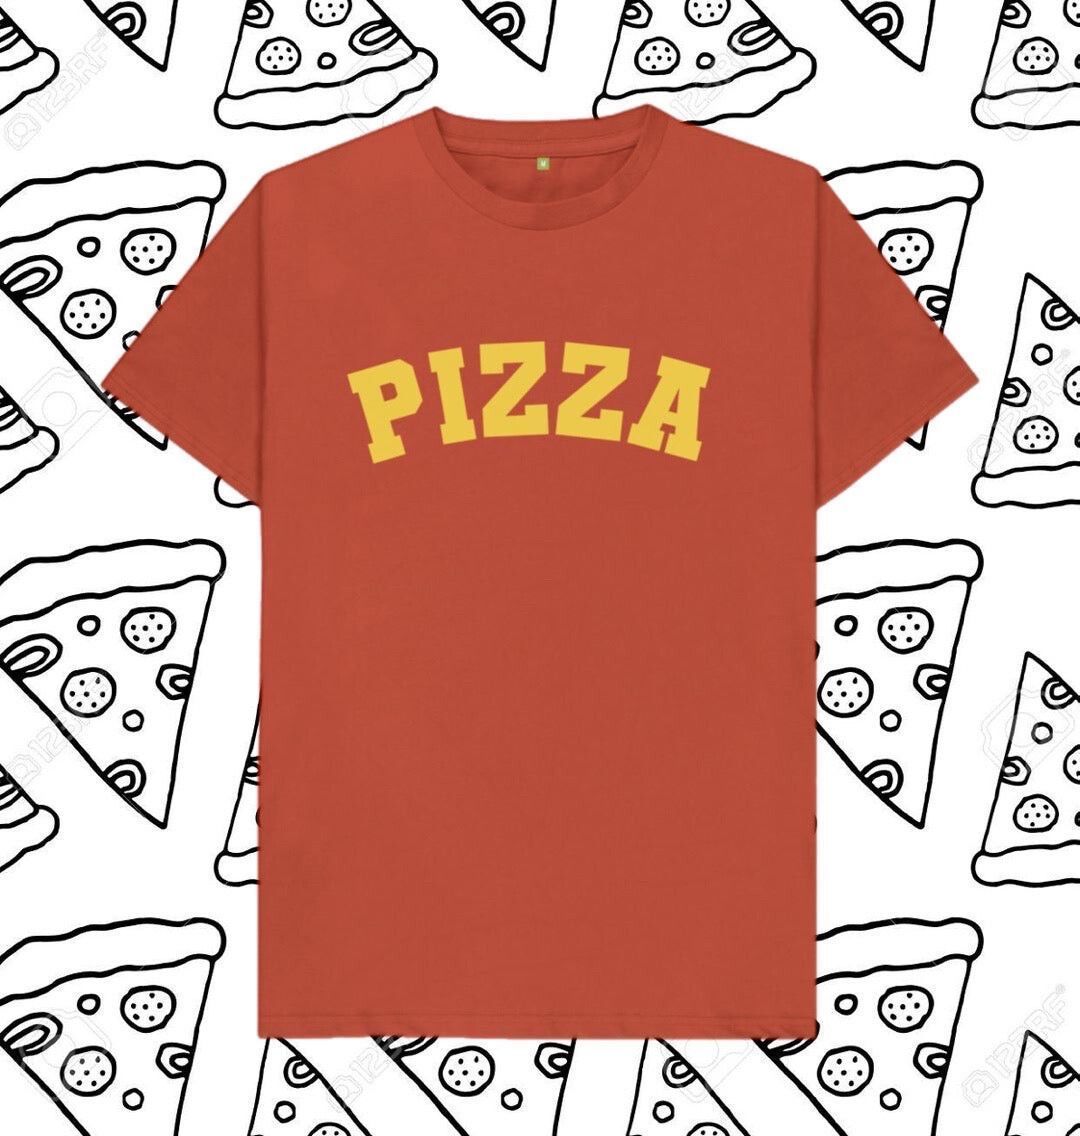 Pizza varsity t-shirt